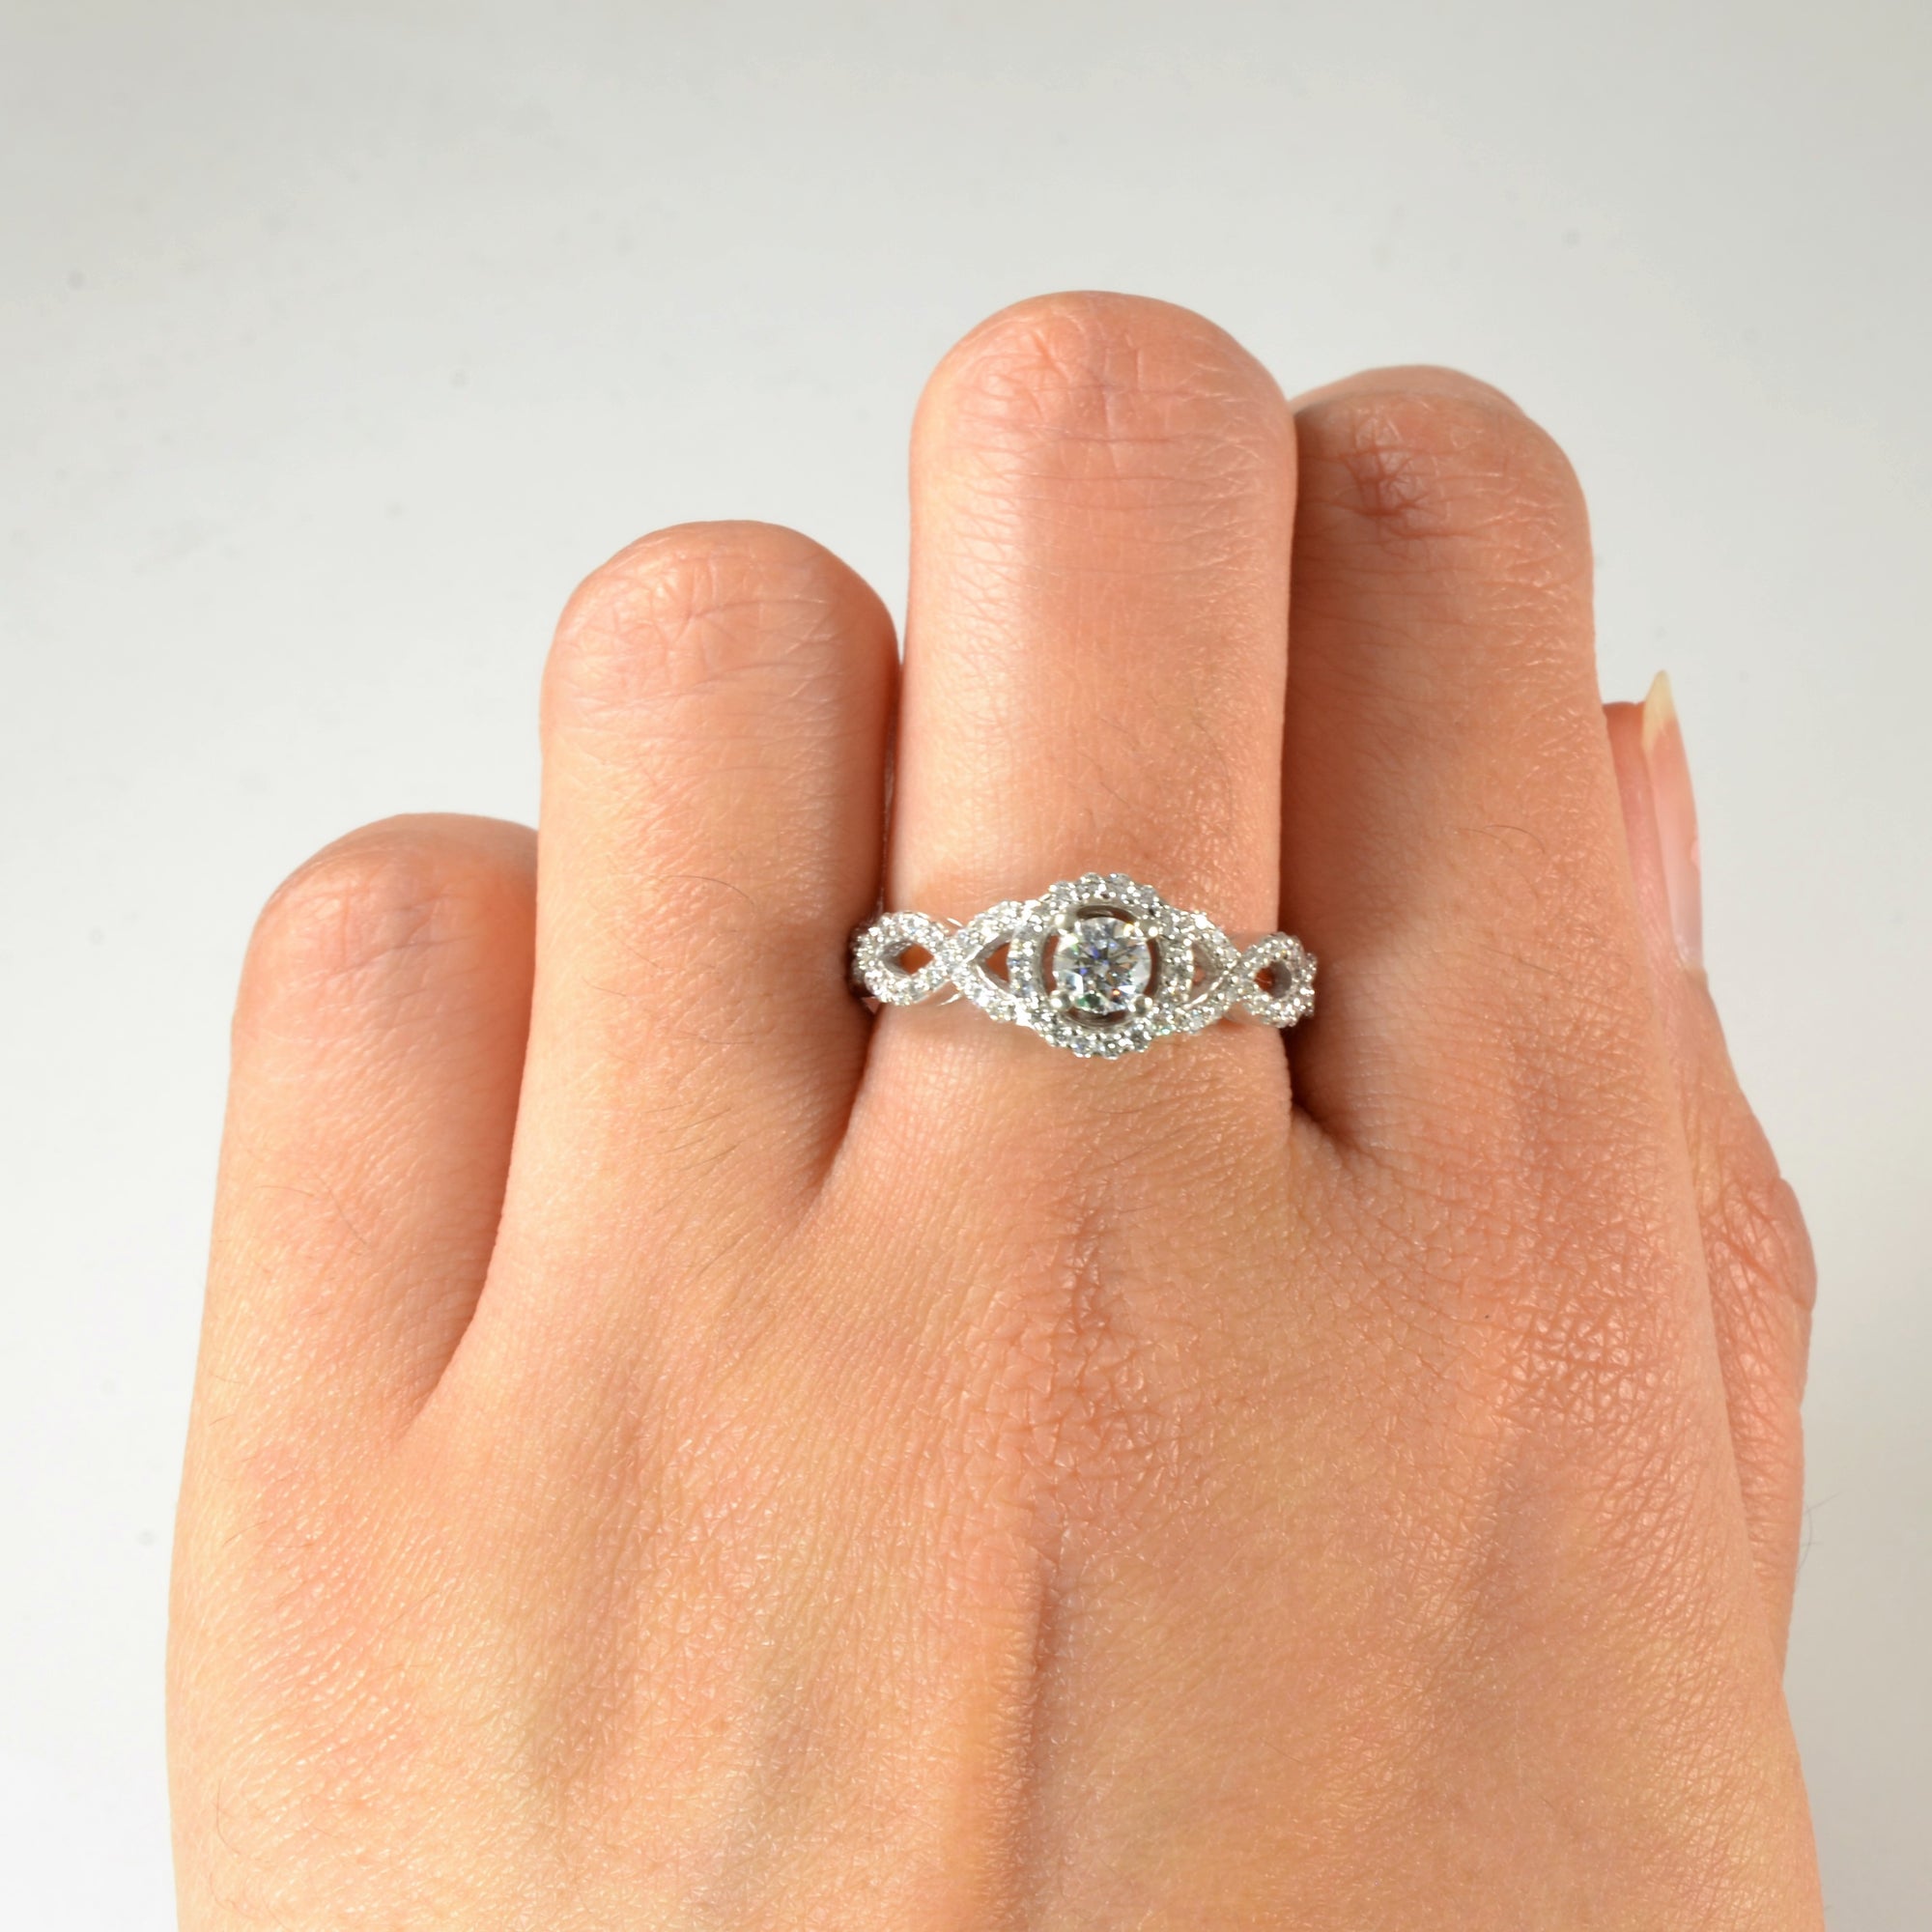 Braided Pave Diamond Ring | 0.57ctw | SZ 7 |